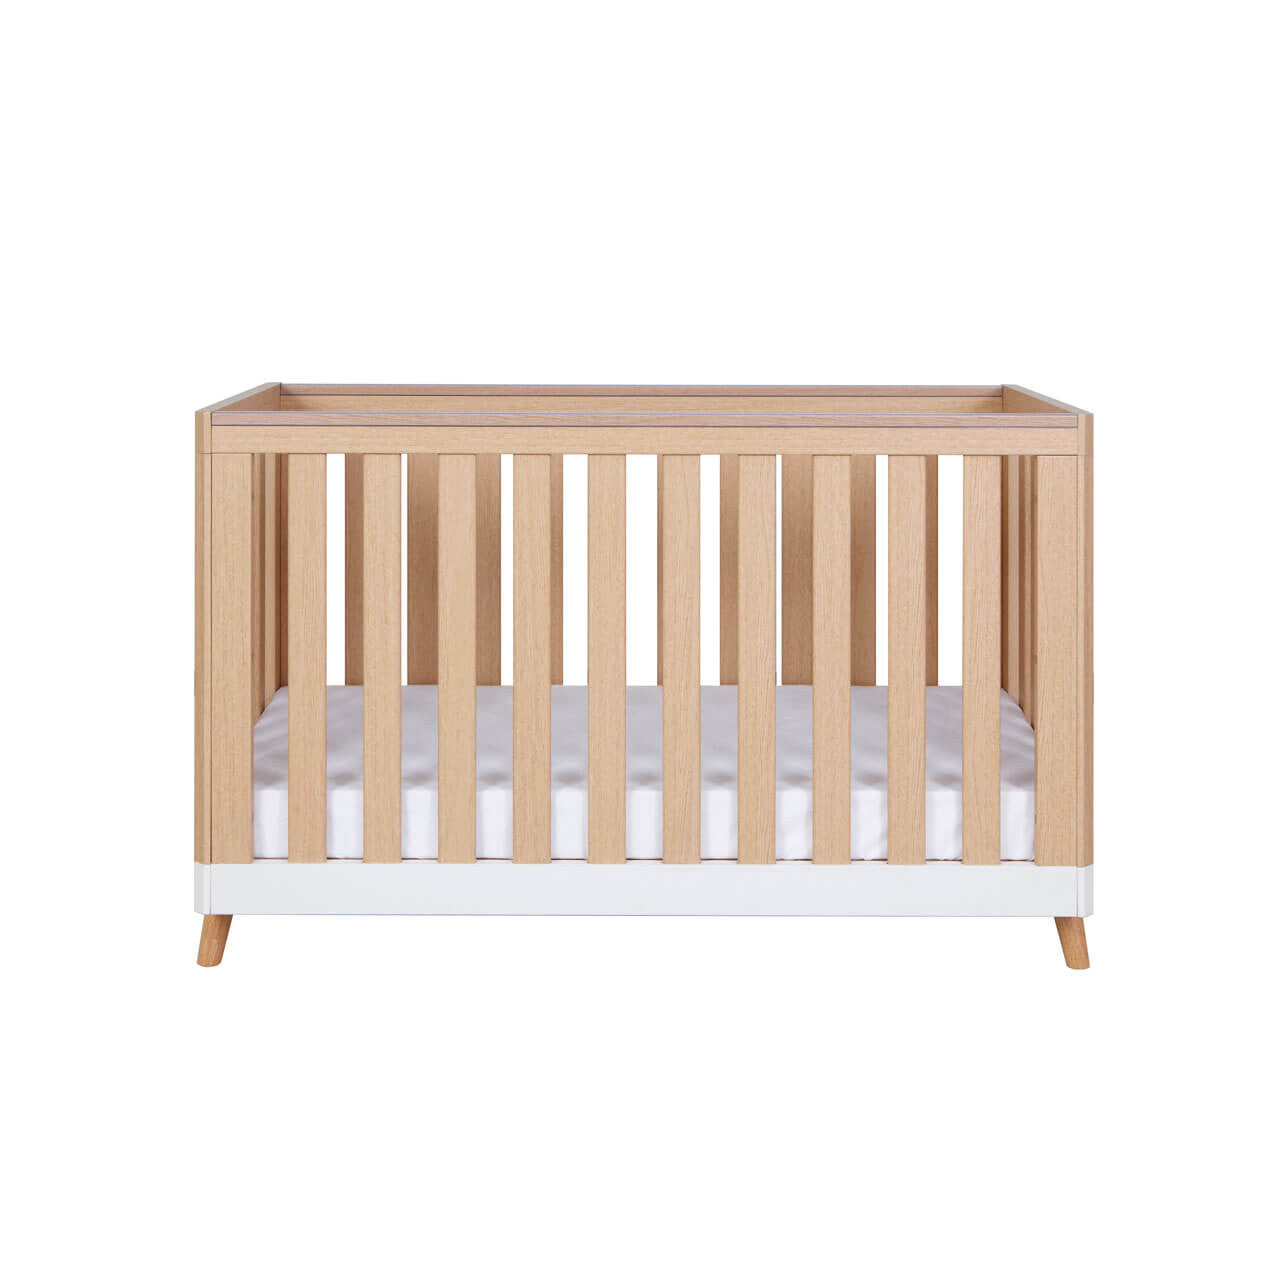 Tutti Bambini Hygge Mini Cot Bed - White/Light Oak - For Your Little One